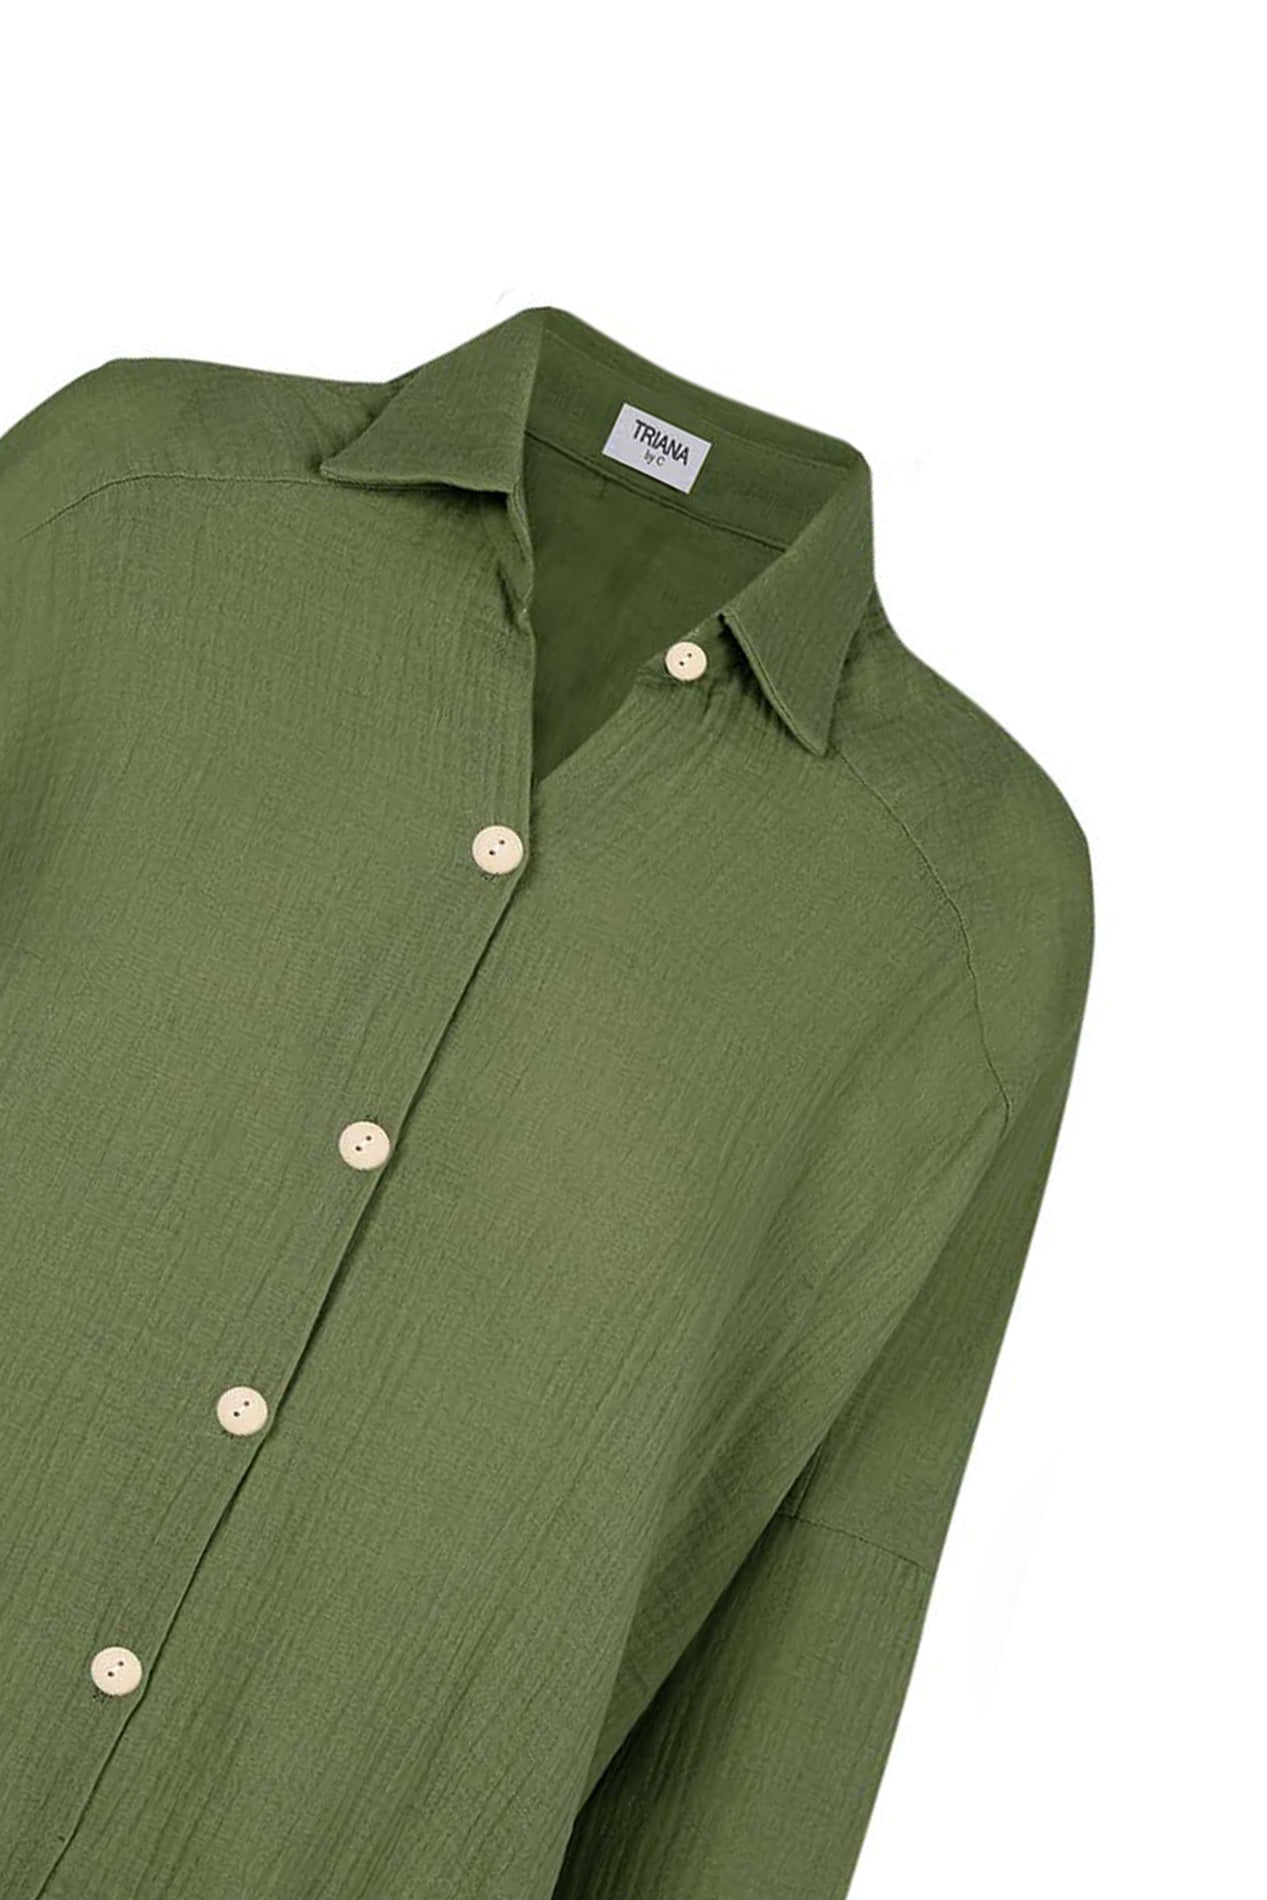 Khaki green STAR blouse